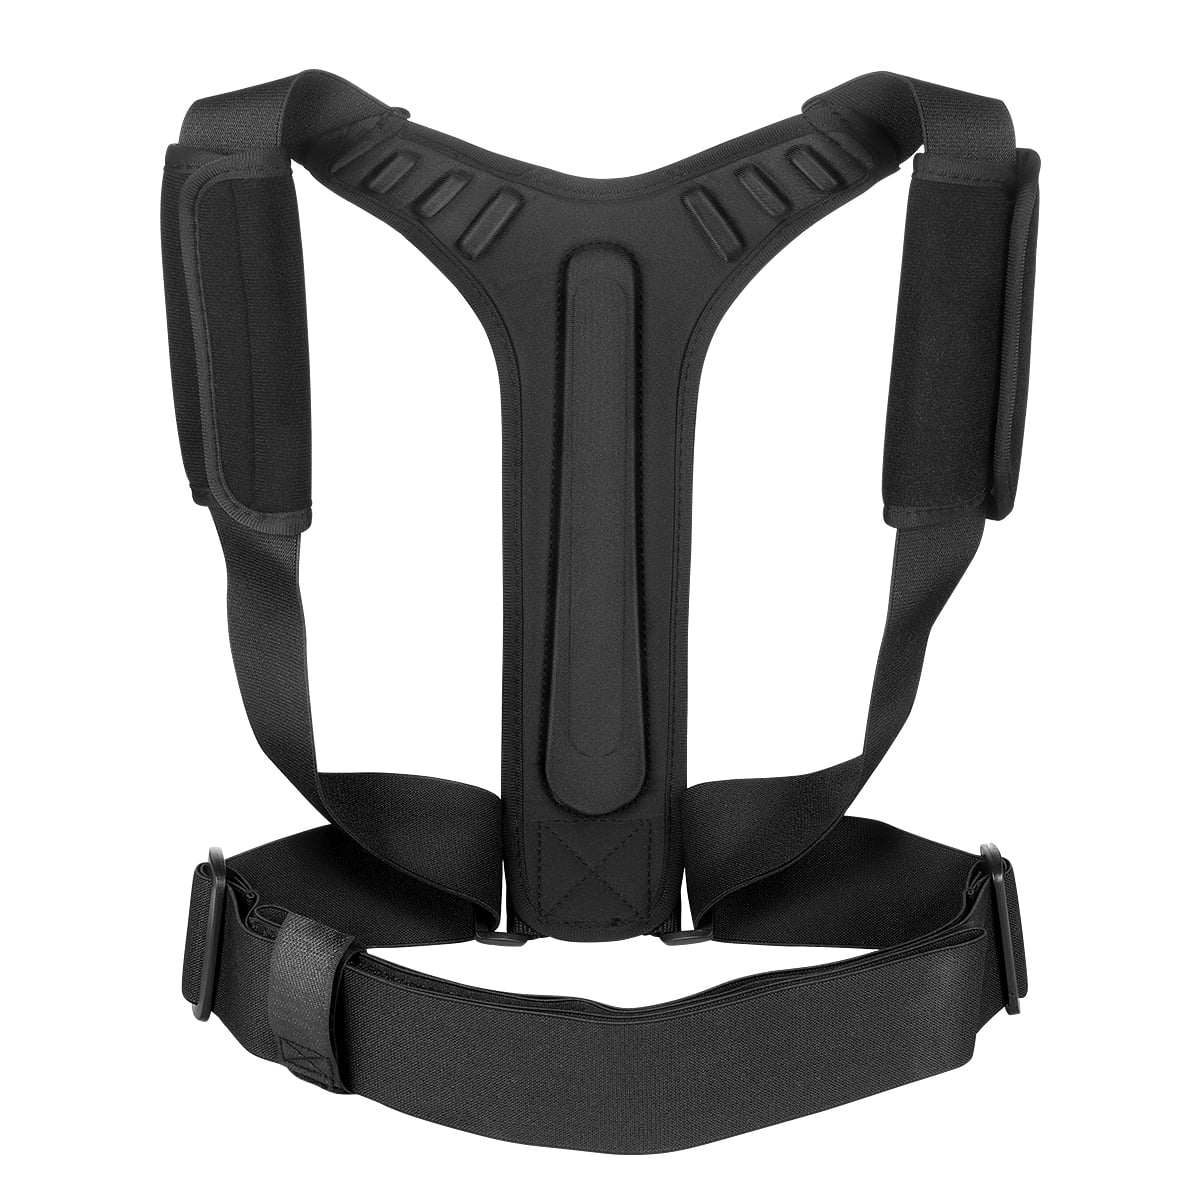 EXCEART Double Shoulder Support Shoulder Wrap Protector Shoulder Strap  Brace for Outdoor Hiking Lifting Sports (Size S)